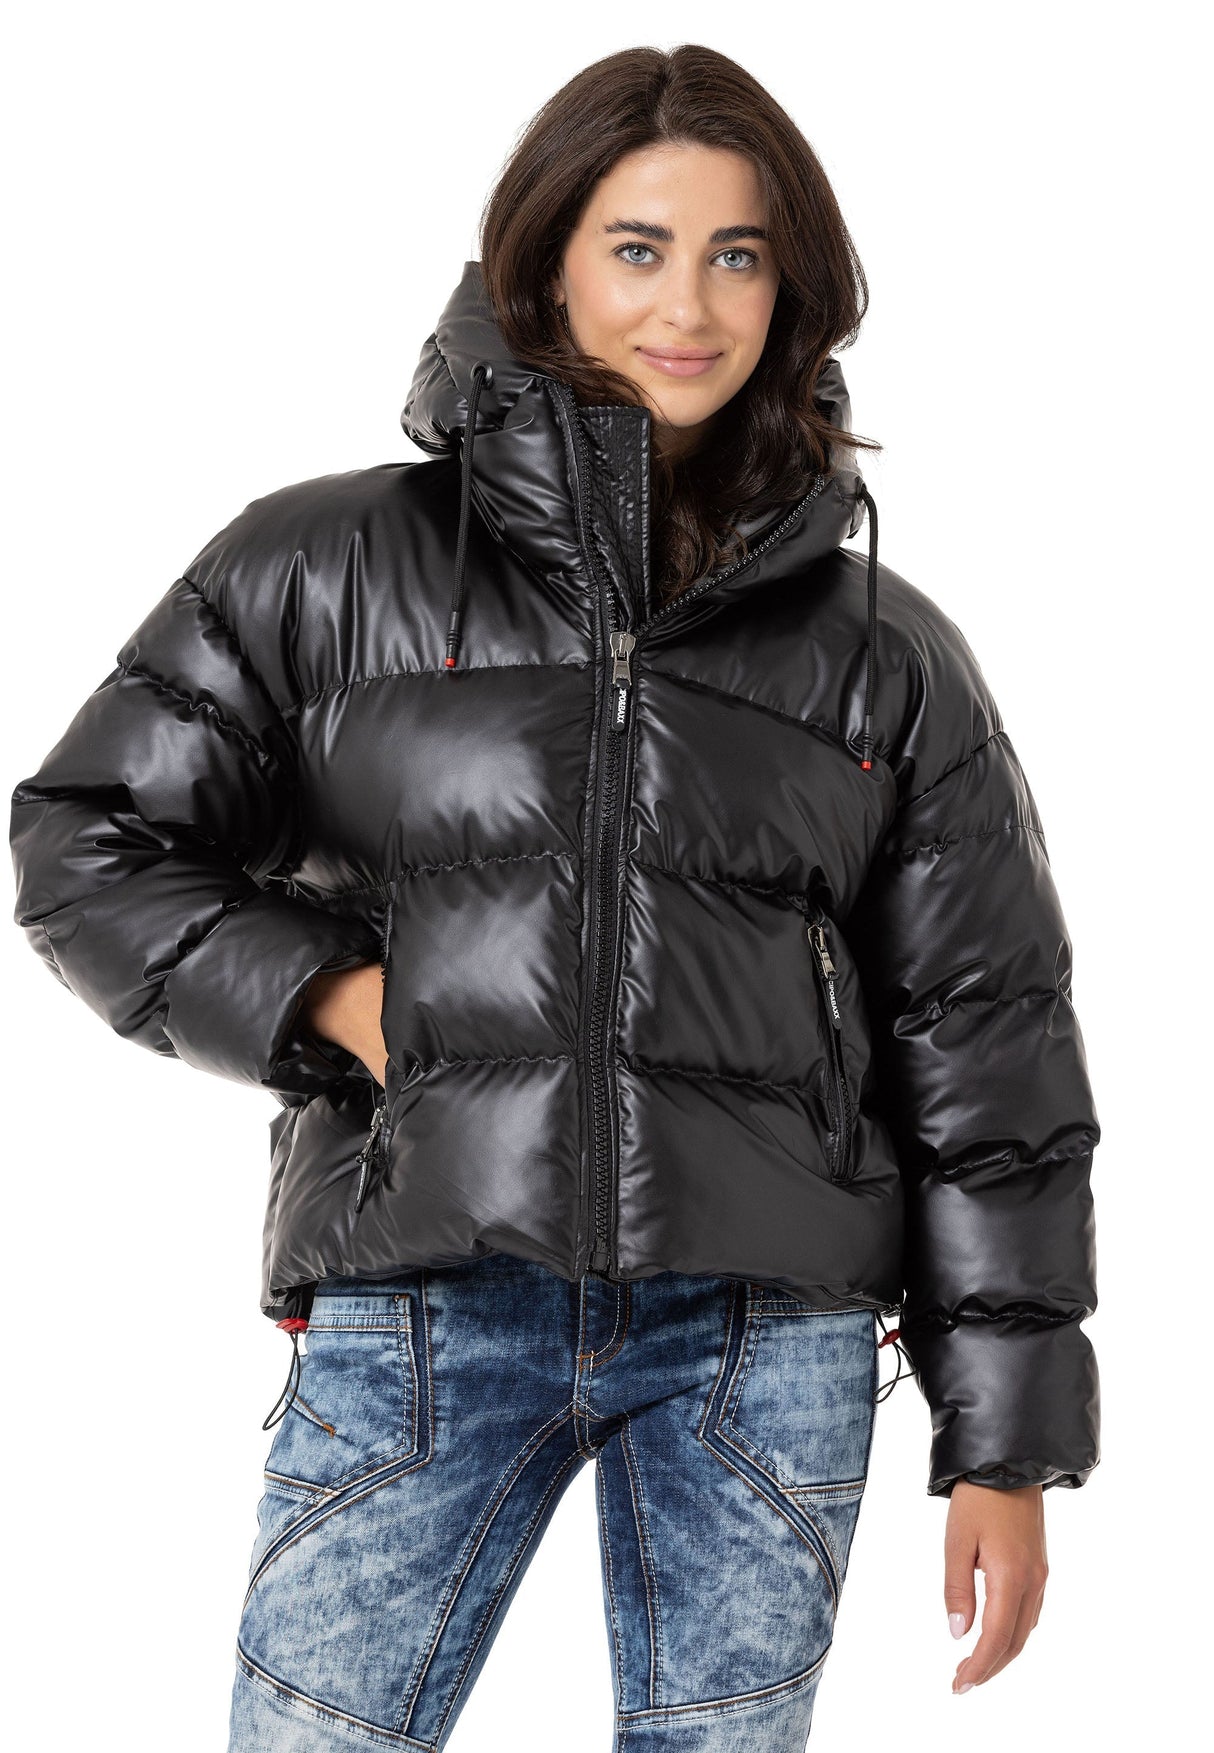 WM139 women's winter jacket in elegant design